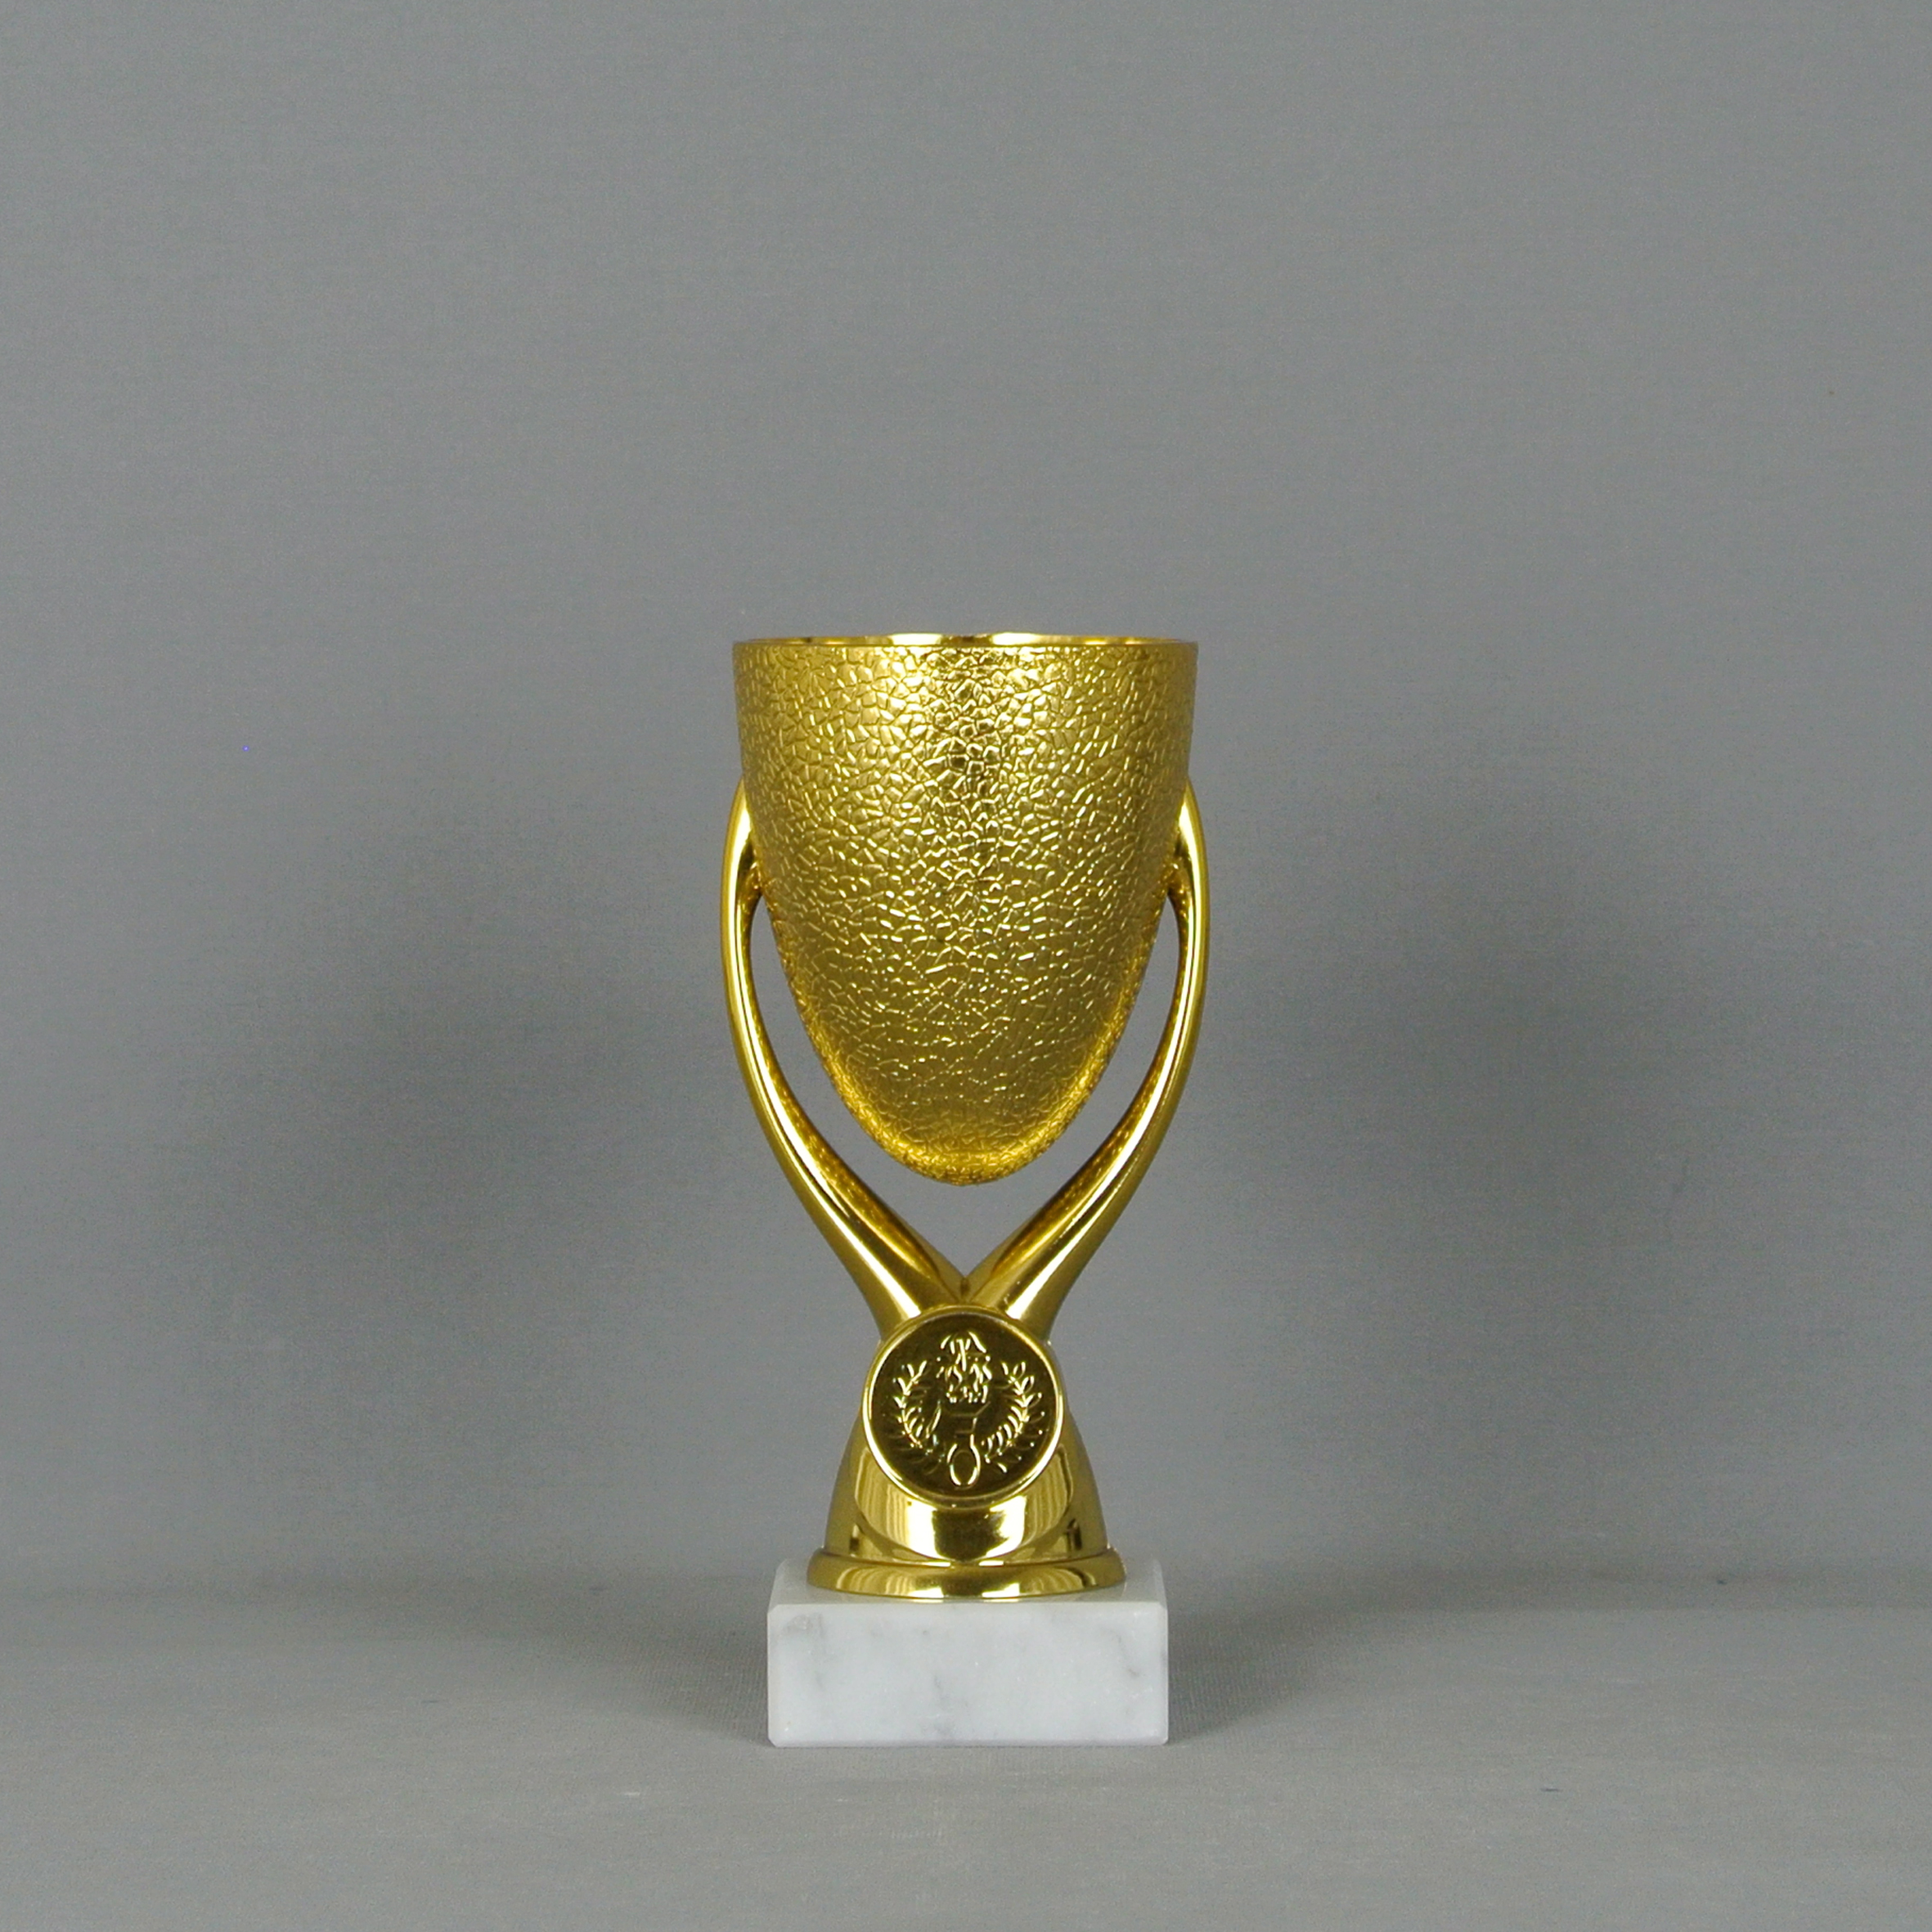 echter Gravur 7,7 cm Fußball Figur 3er Serie gold silber bronze Pokal Trophäe 